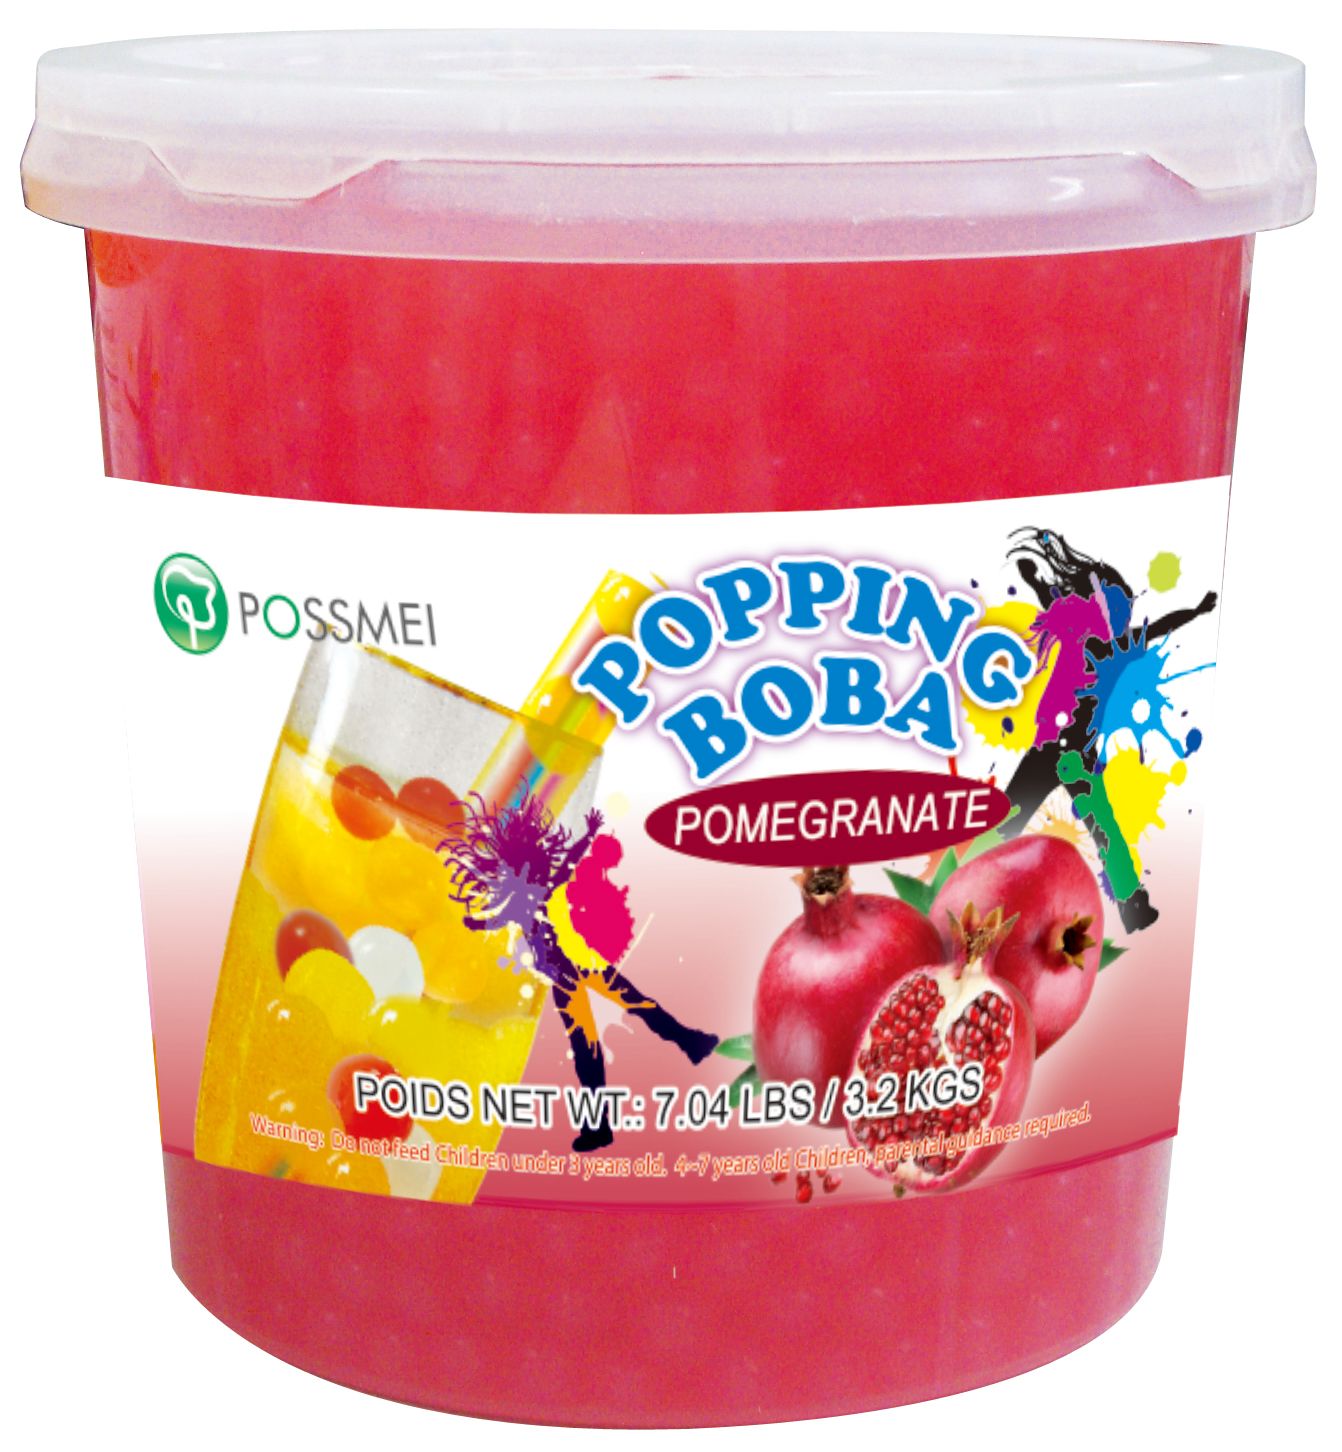 Pomegranate Popping Bursting Boba – TUB